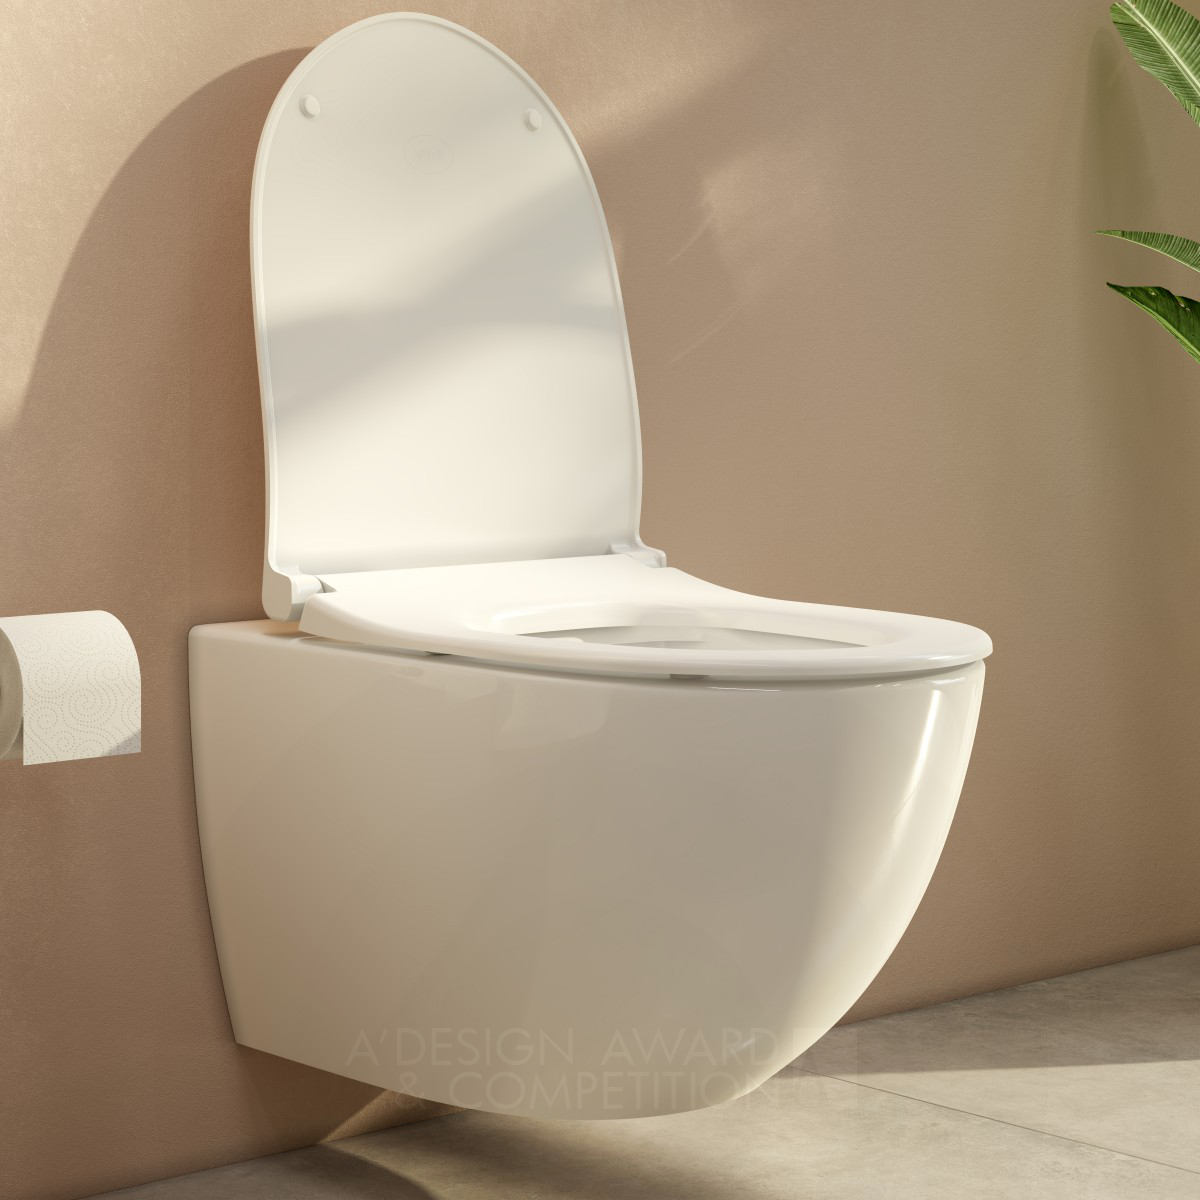 Digital Panorama's Rimex WC Pan: A Breakthrough in Bathroom Hygiene and Design